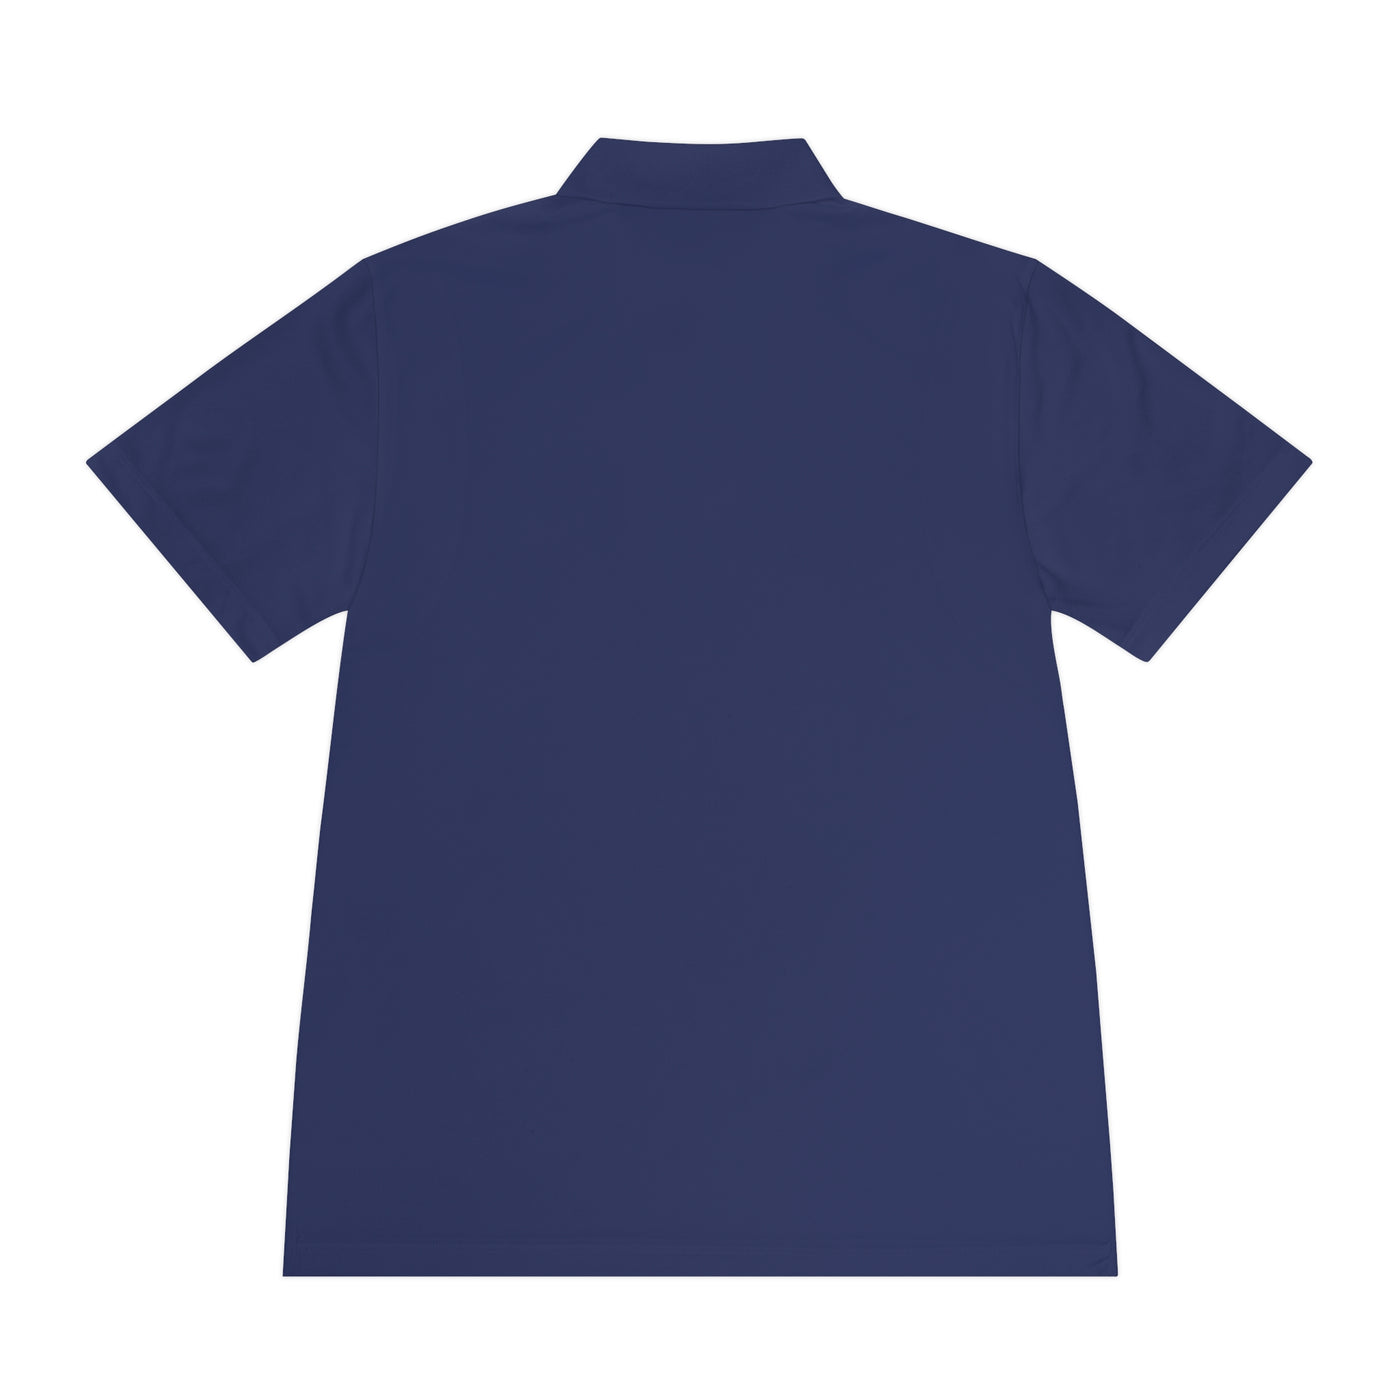 Men's UBF Sport Polo Shirt